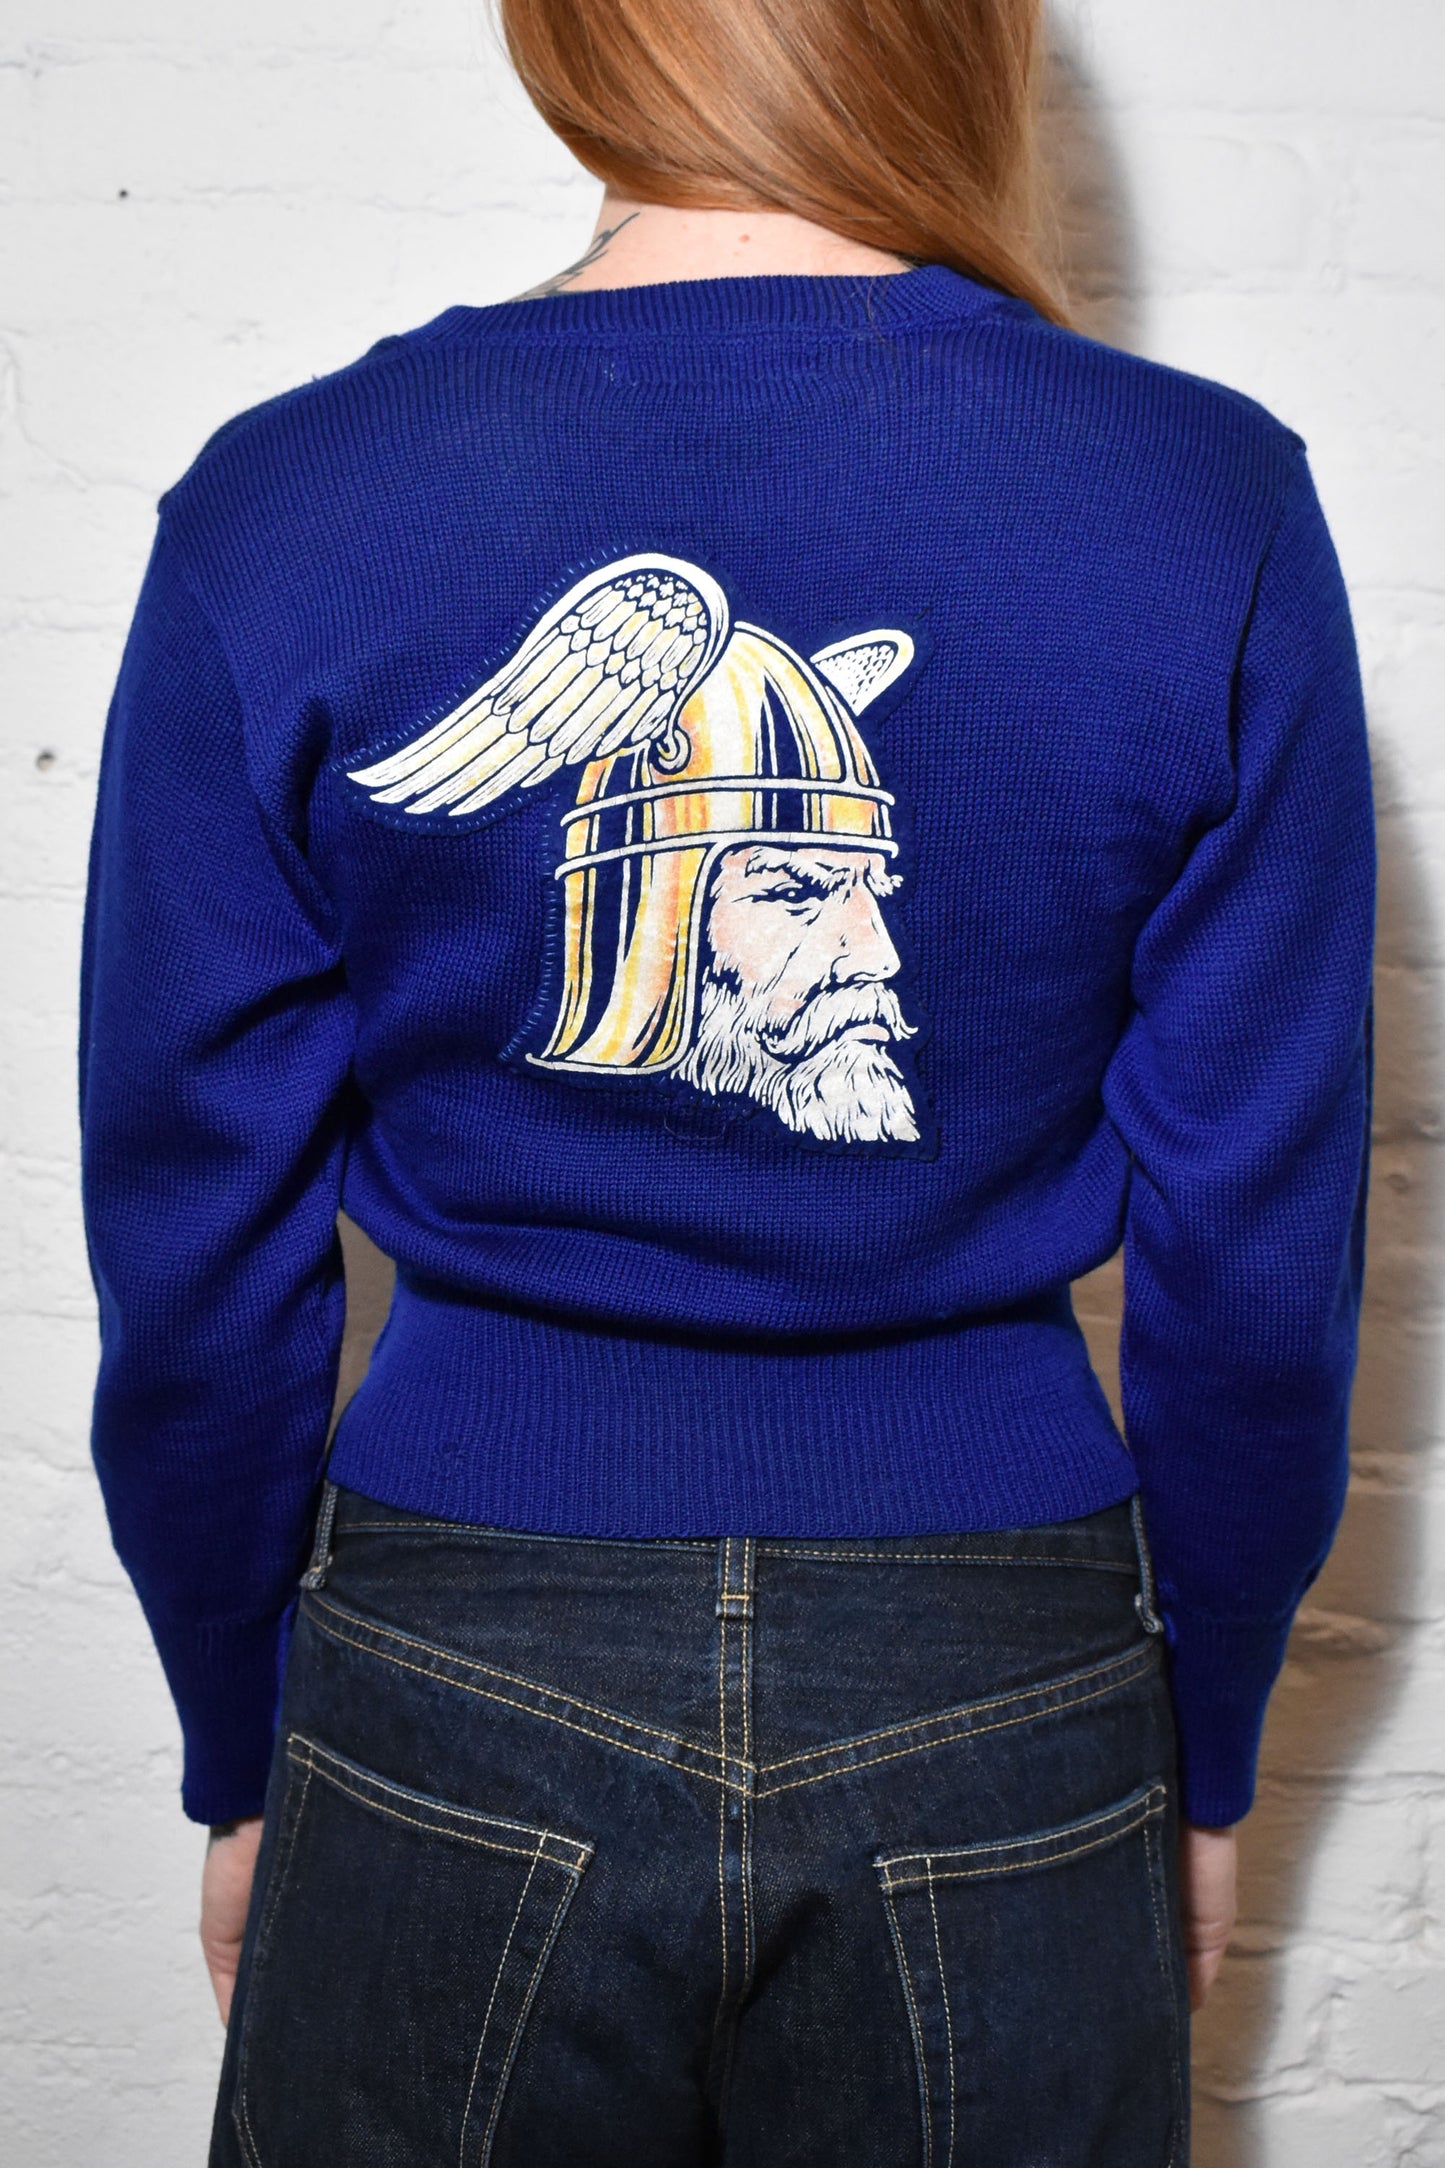 Vintage 1950s "Idaho Sporting Good" Royal Blue Sweater